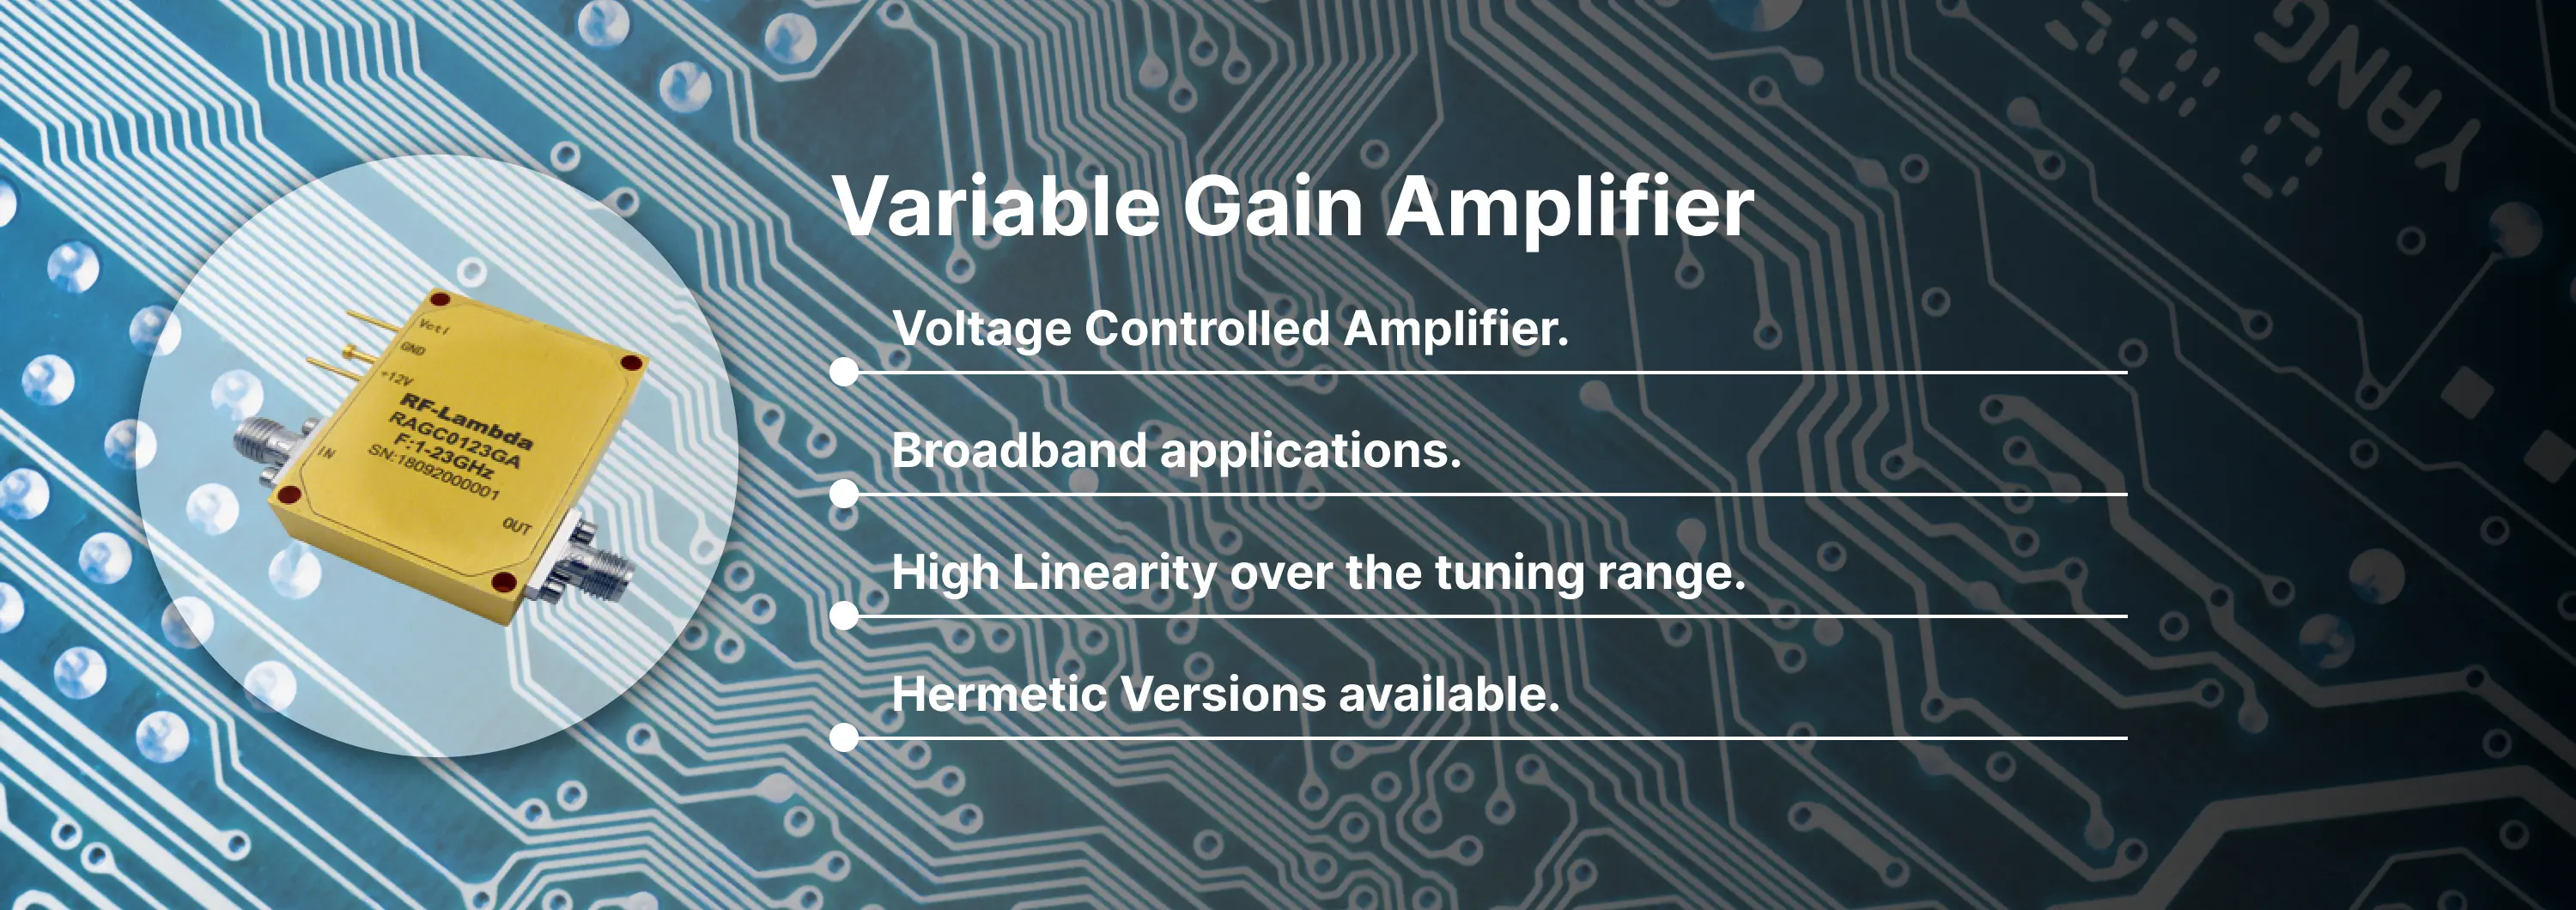 Variable Gain Amplifier (VGA) Banner